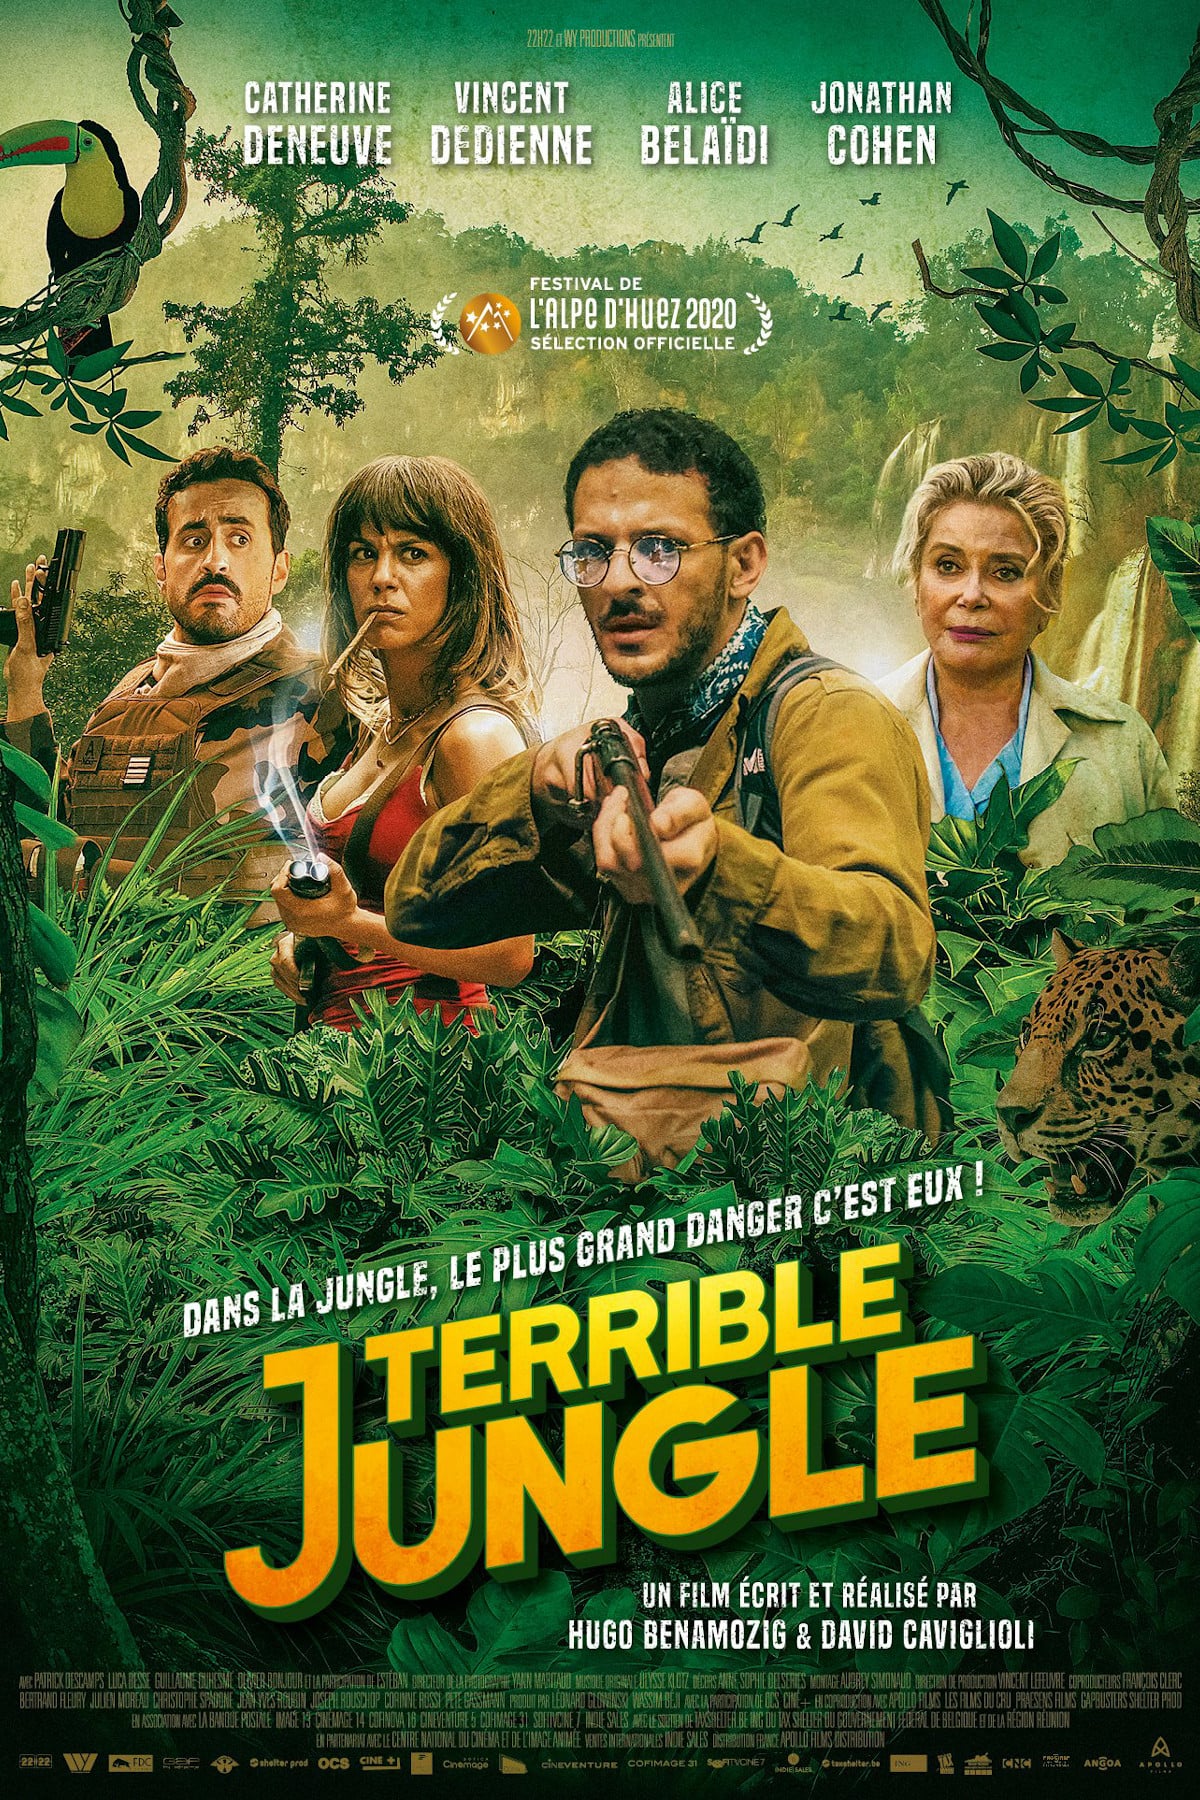 Affiche du film "Terrible jungle"